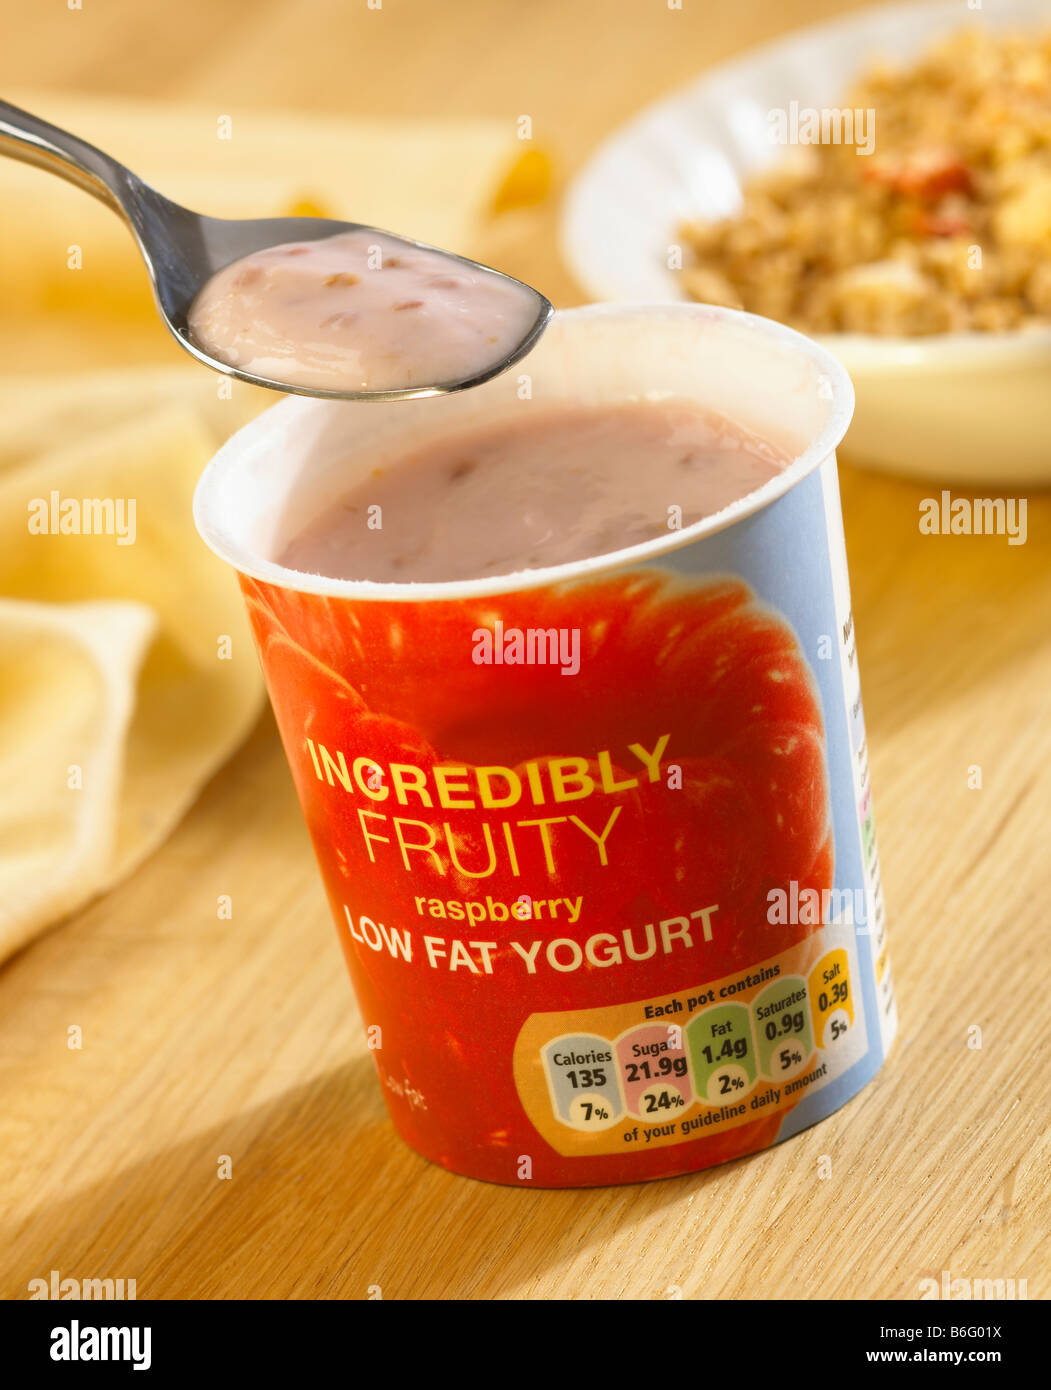 Baja en grasa yogur de frambuesa olla y cuchara Foto de stock